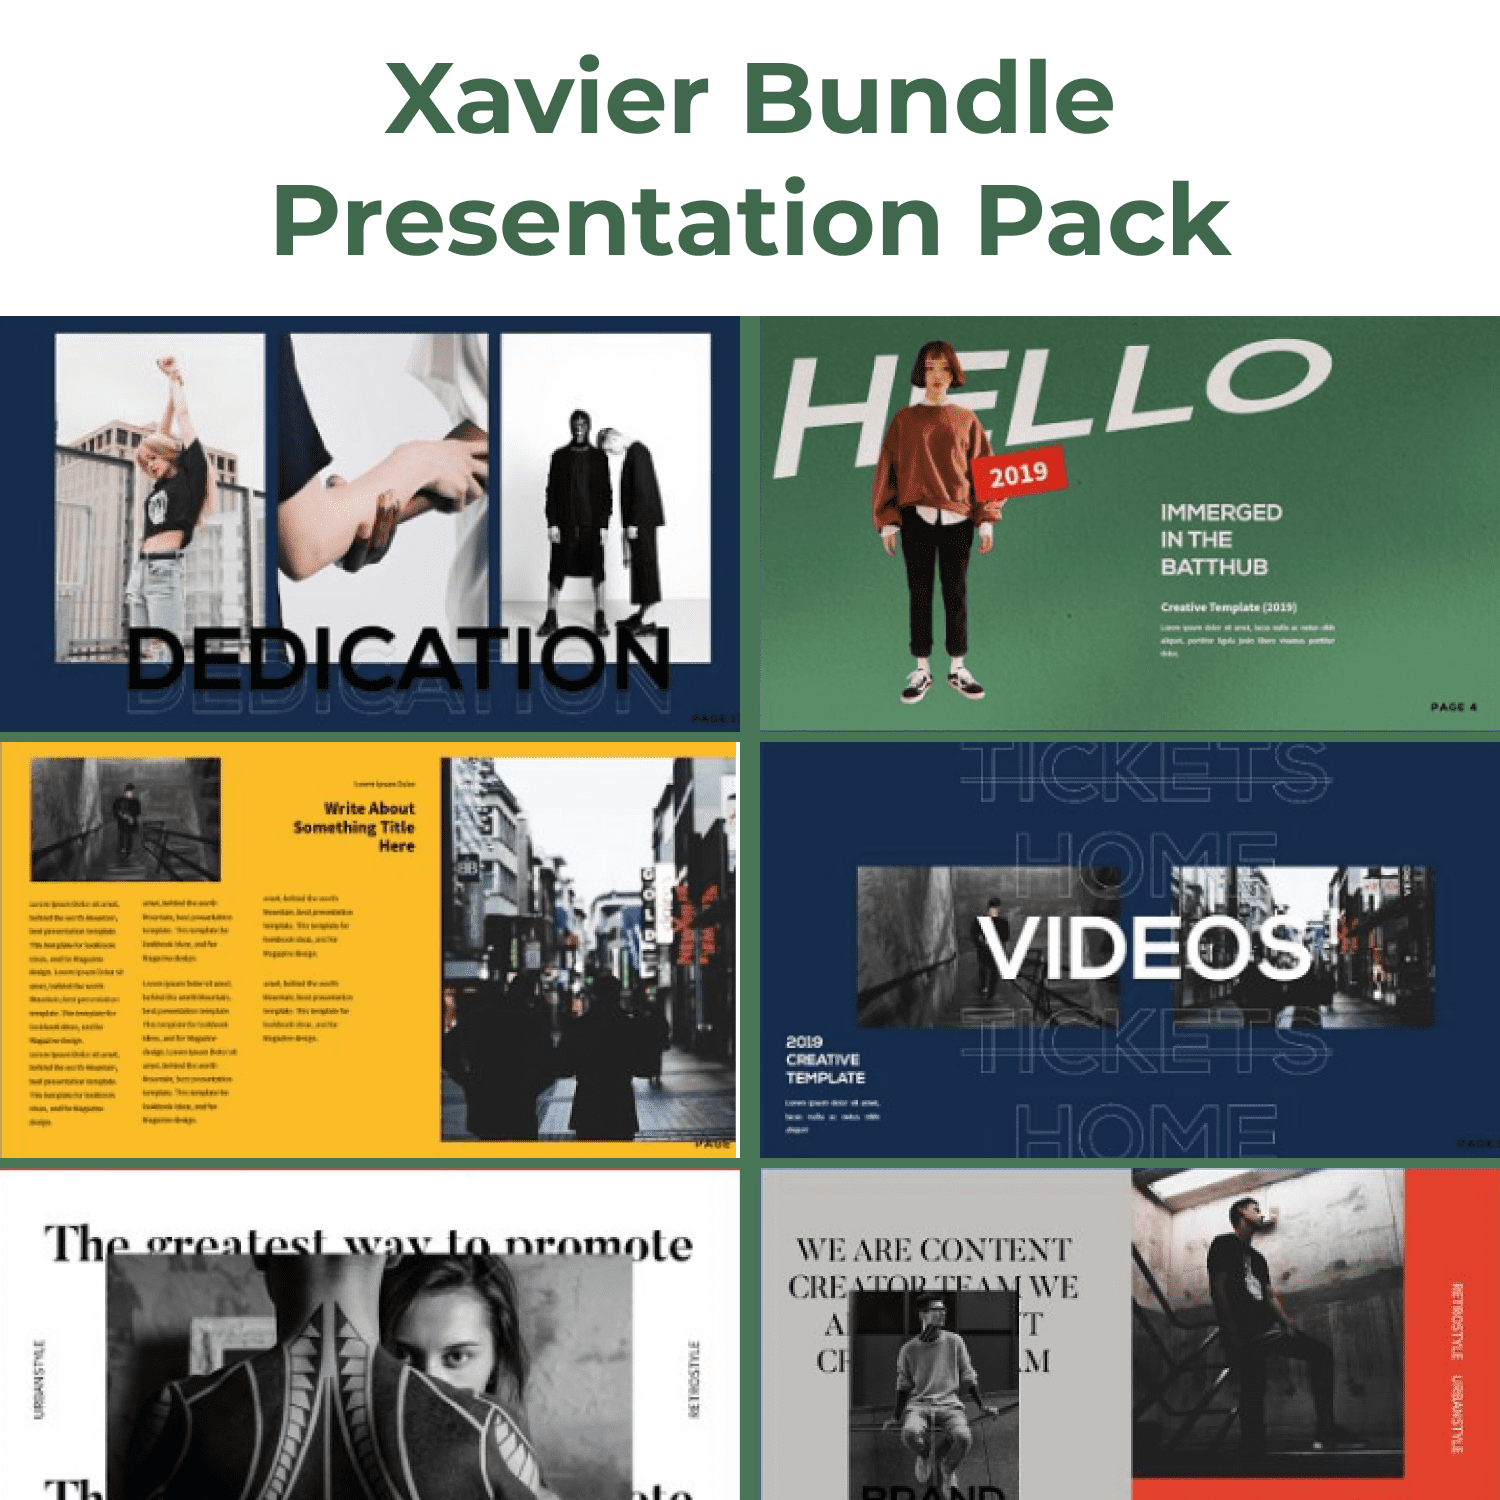 Xavier Bundle Presentation Pack cover image.